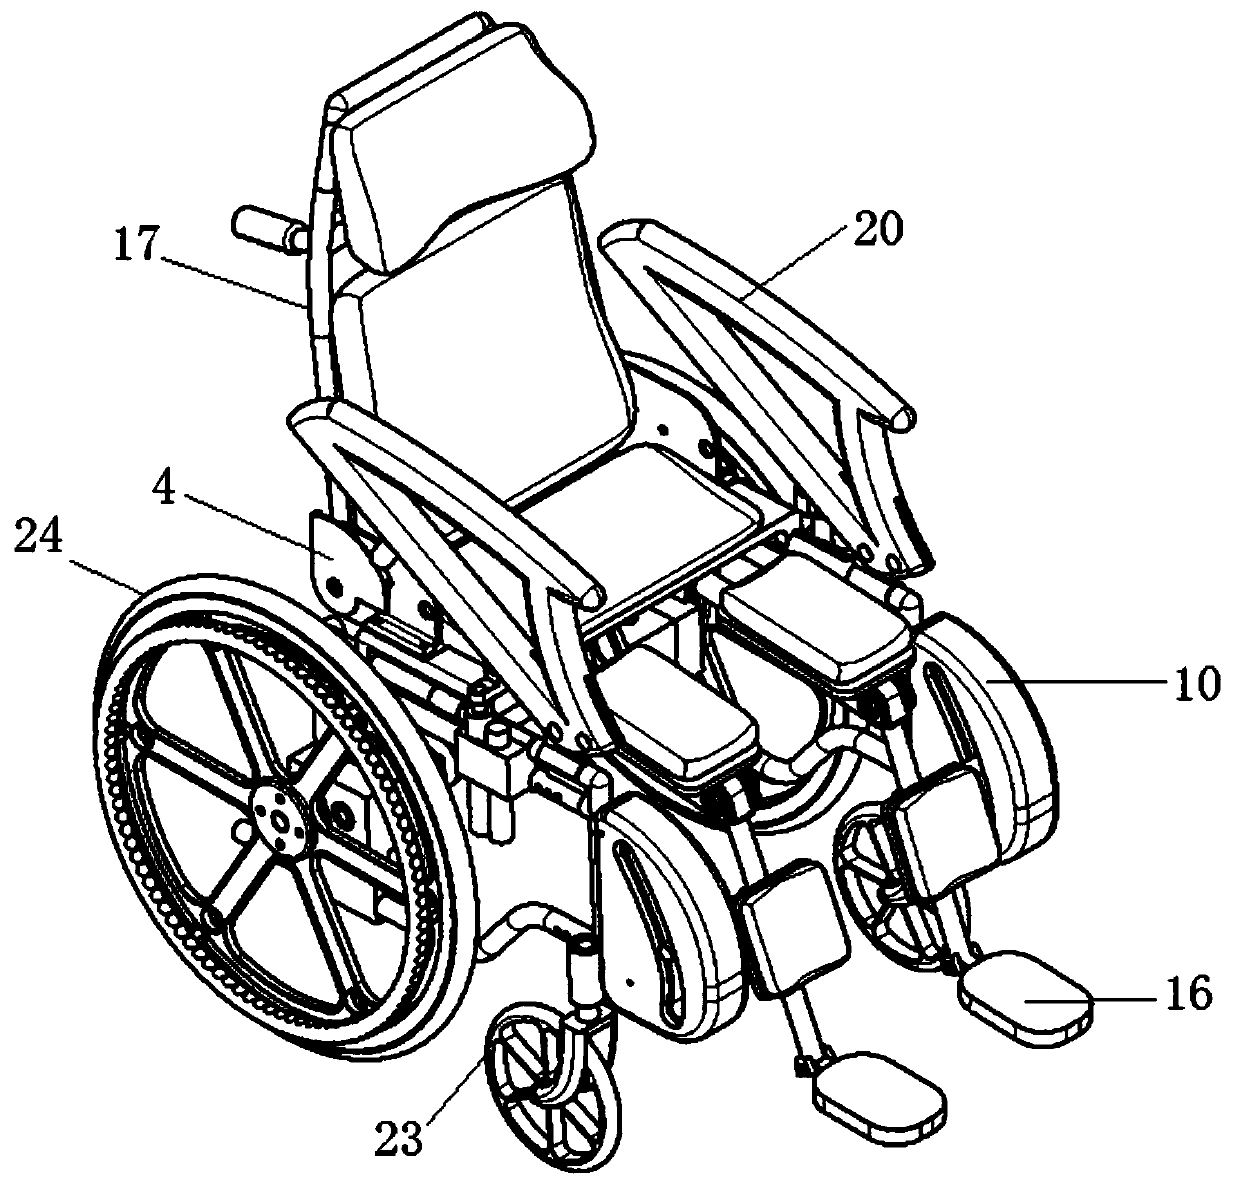 Lower limb rehabilitation exercise wheelchair